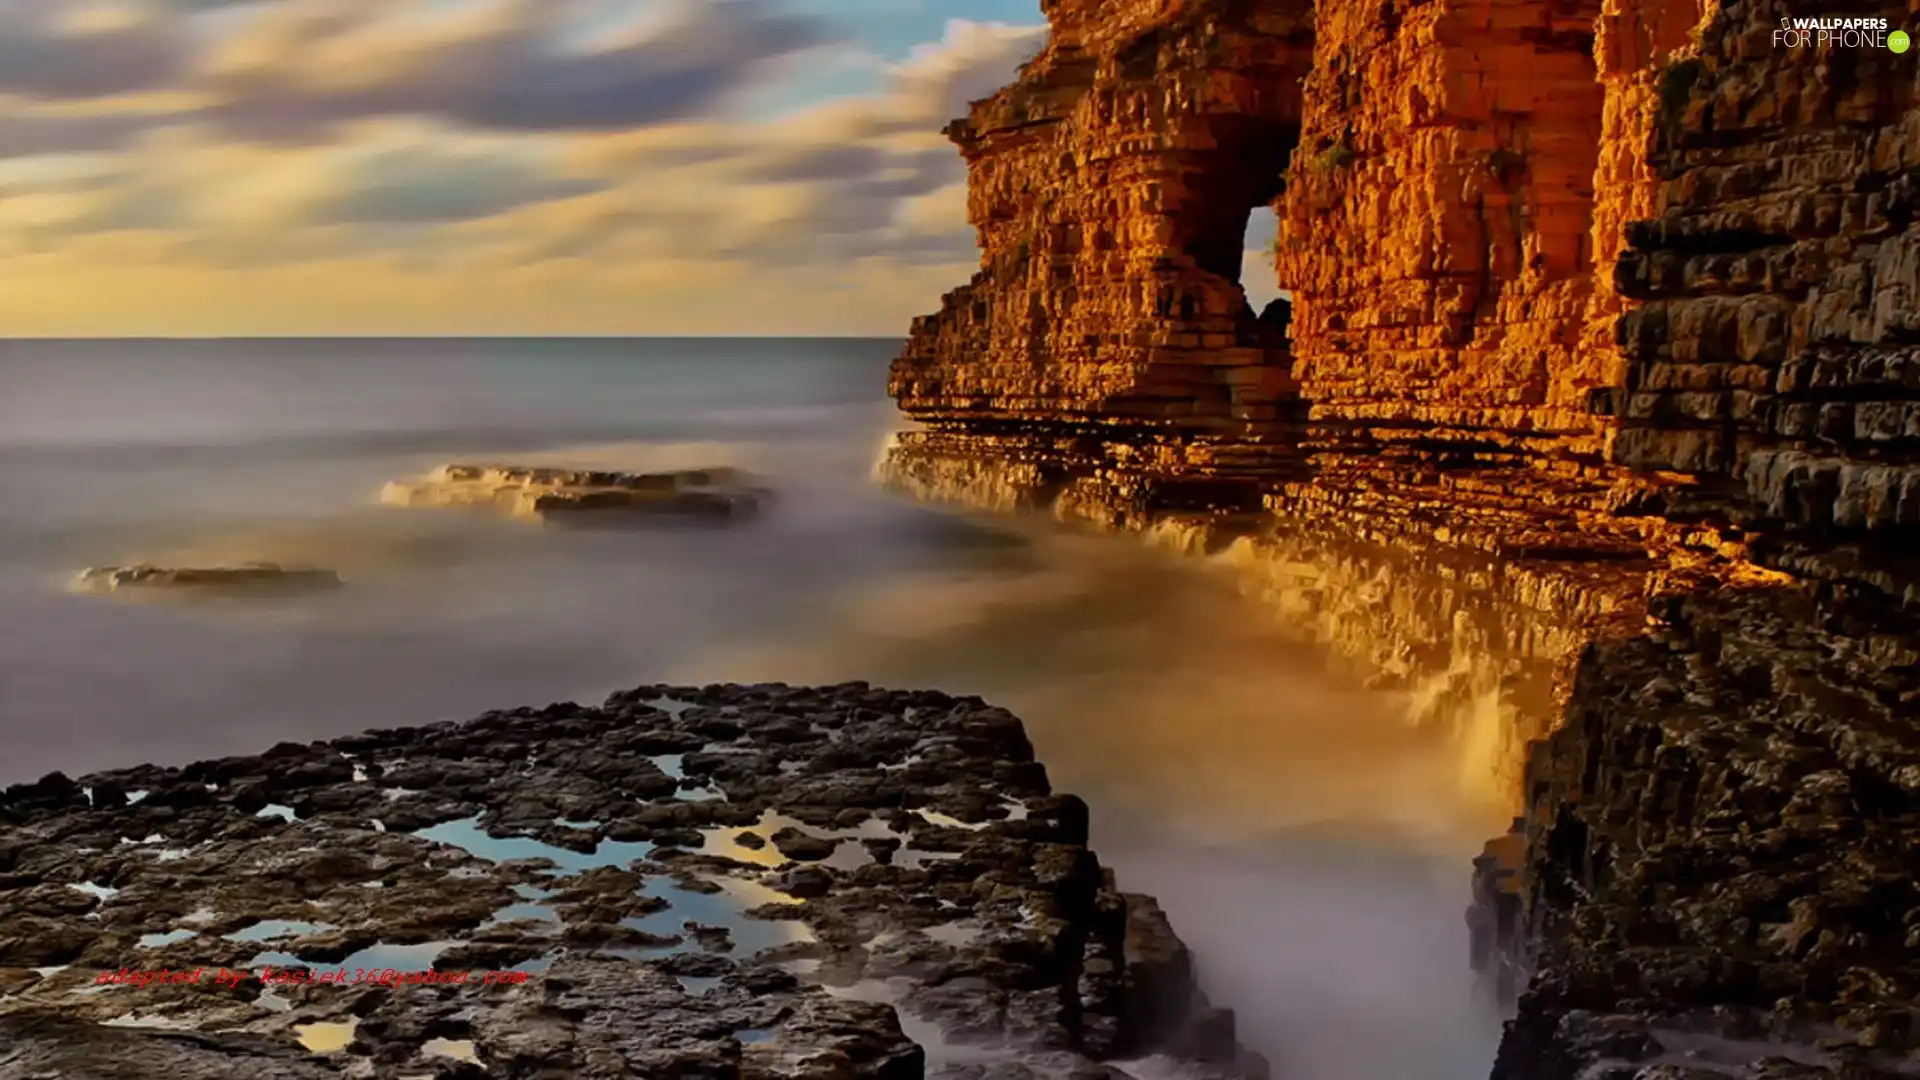 sea, Cliffs, Stones, rocks